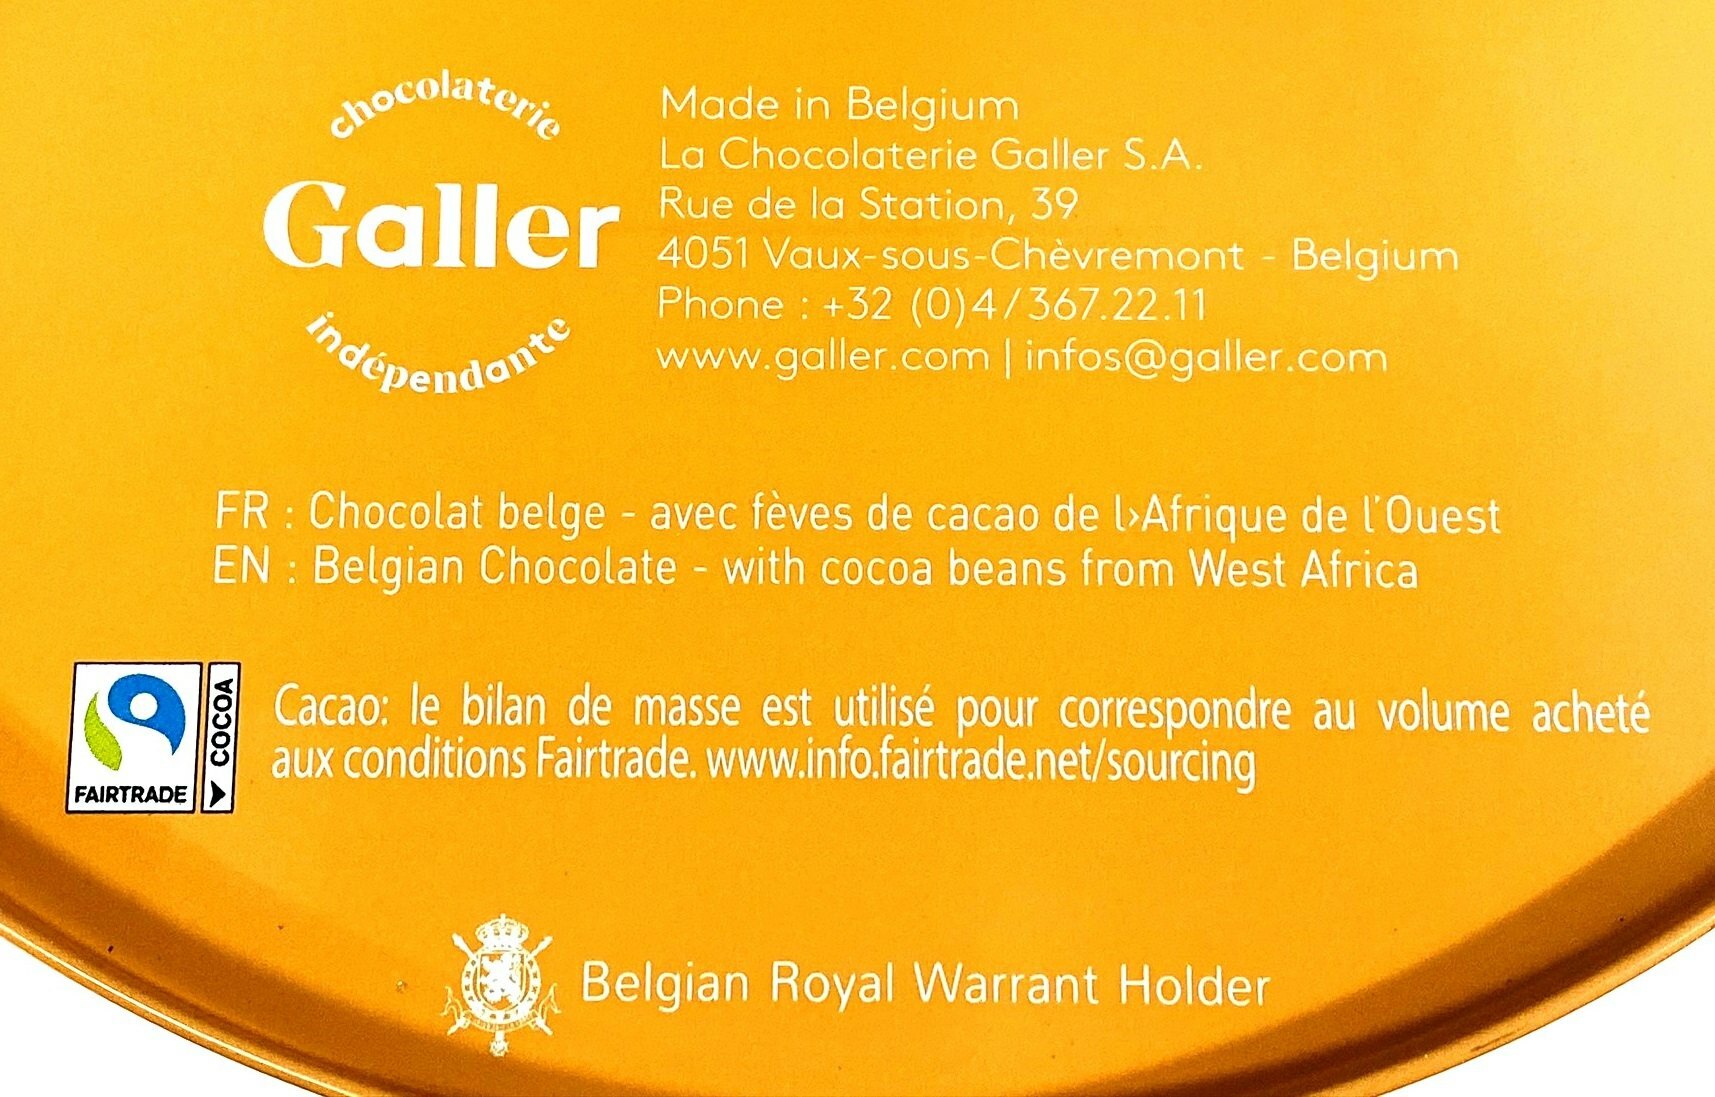 Belgian Royal Warrant Holder.